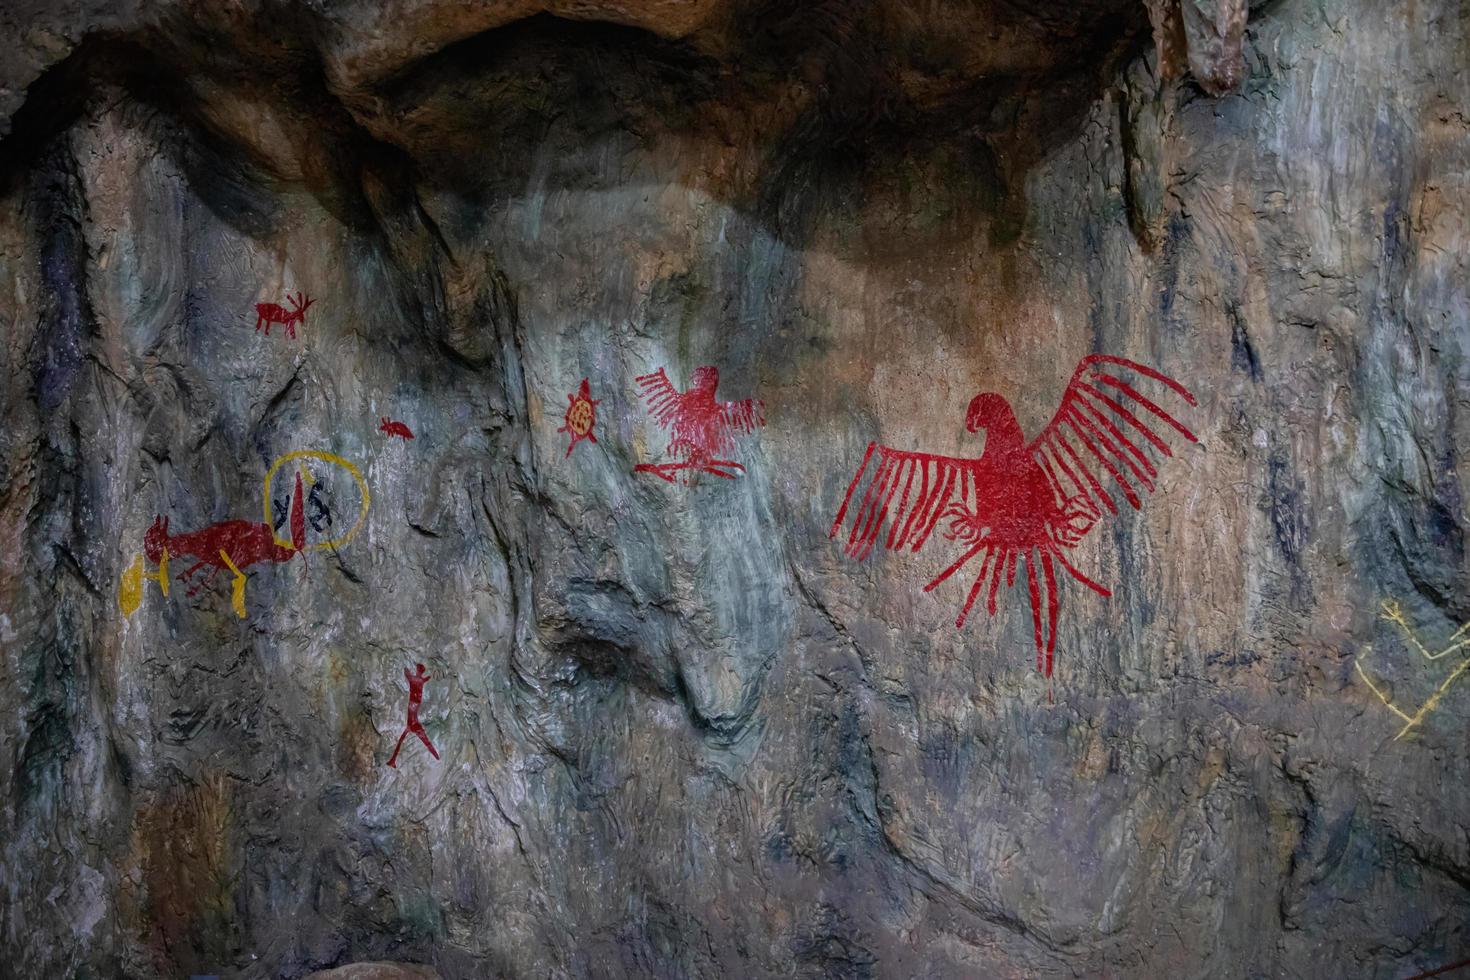 goiania, goias, brazil, 2019 - réplica de pinturas rupestres foto